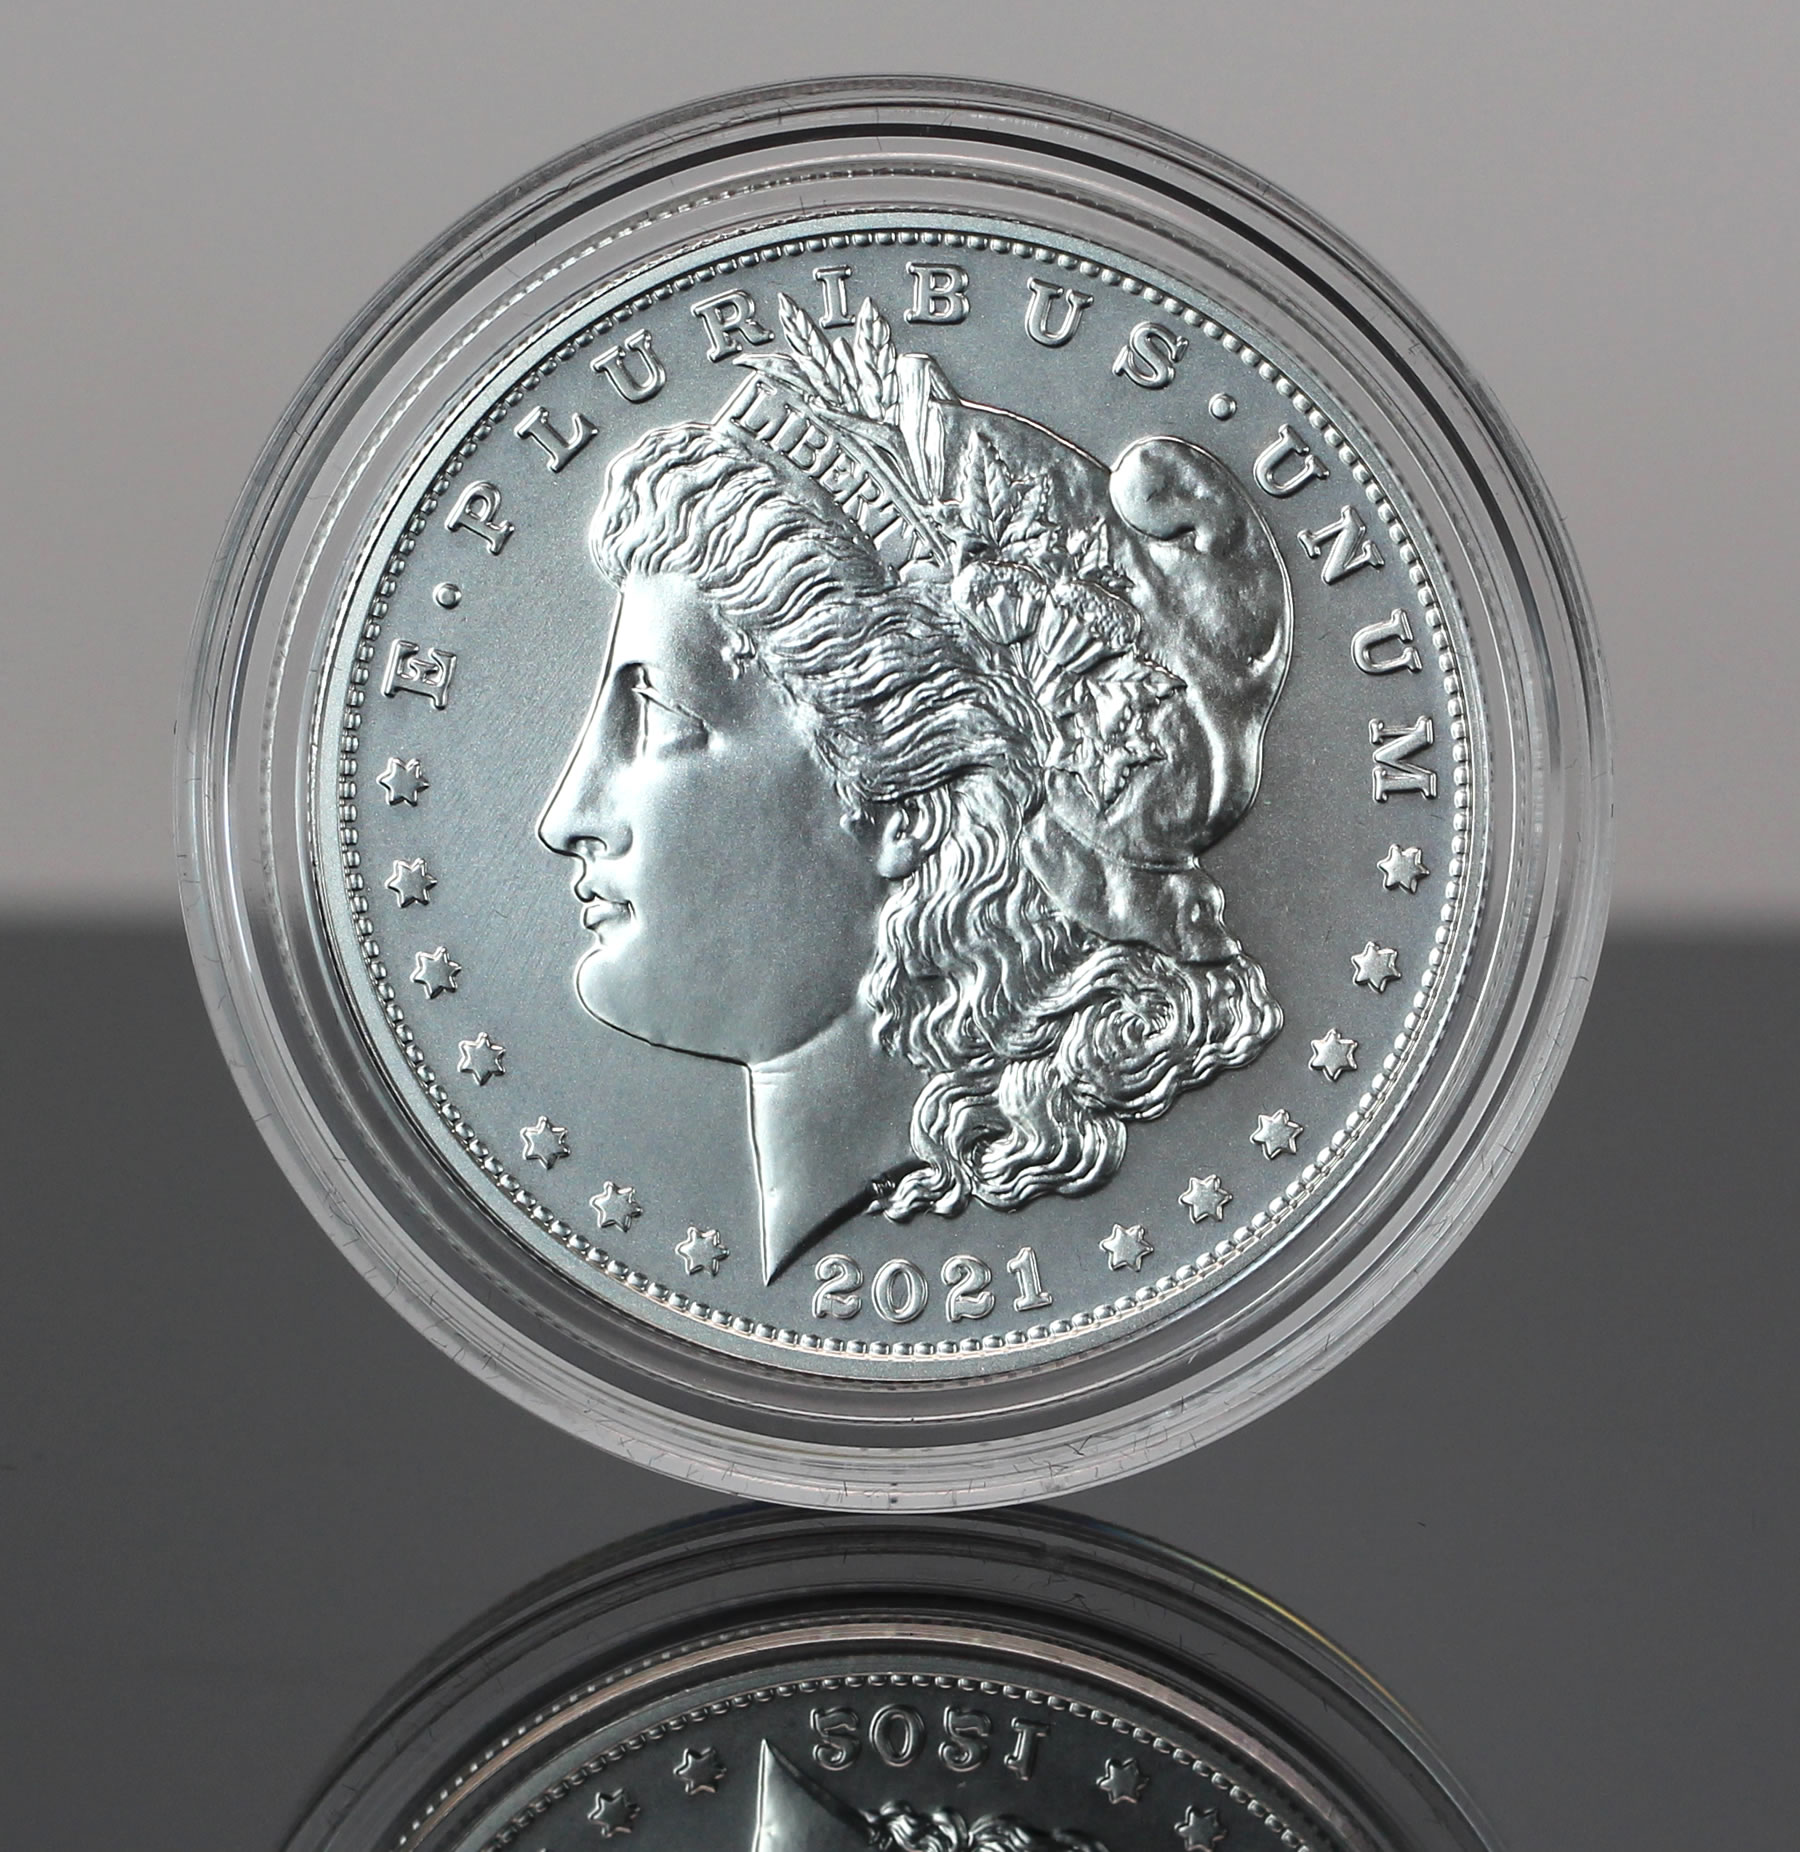 Lot of Five U.S Morgan Silver Dollar Coin Gift Displays 